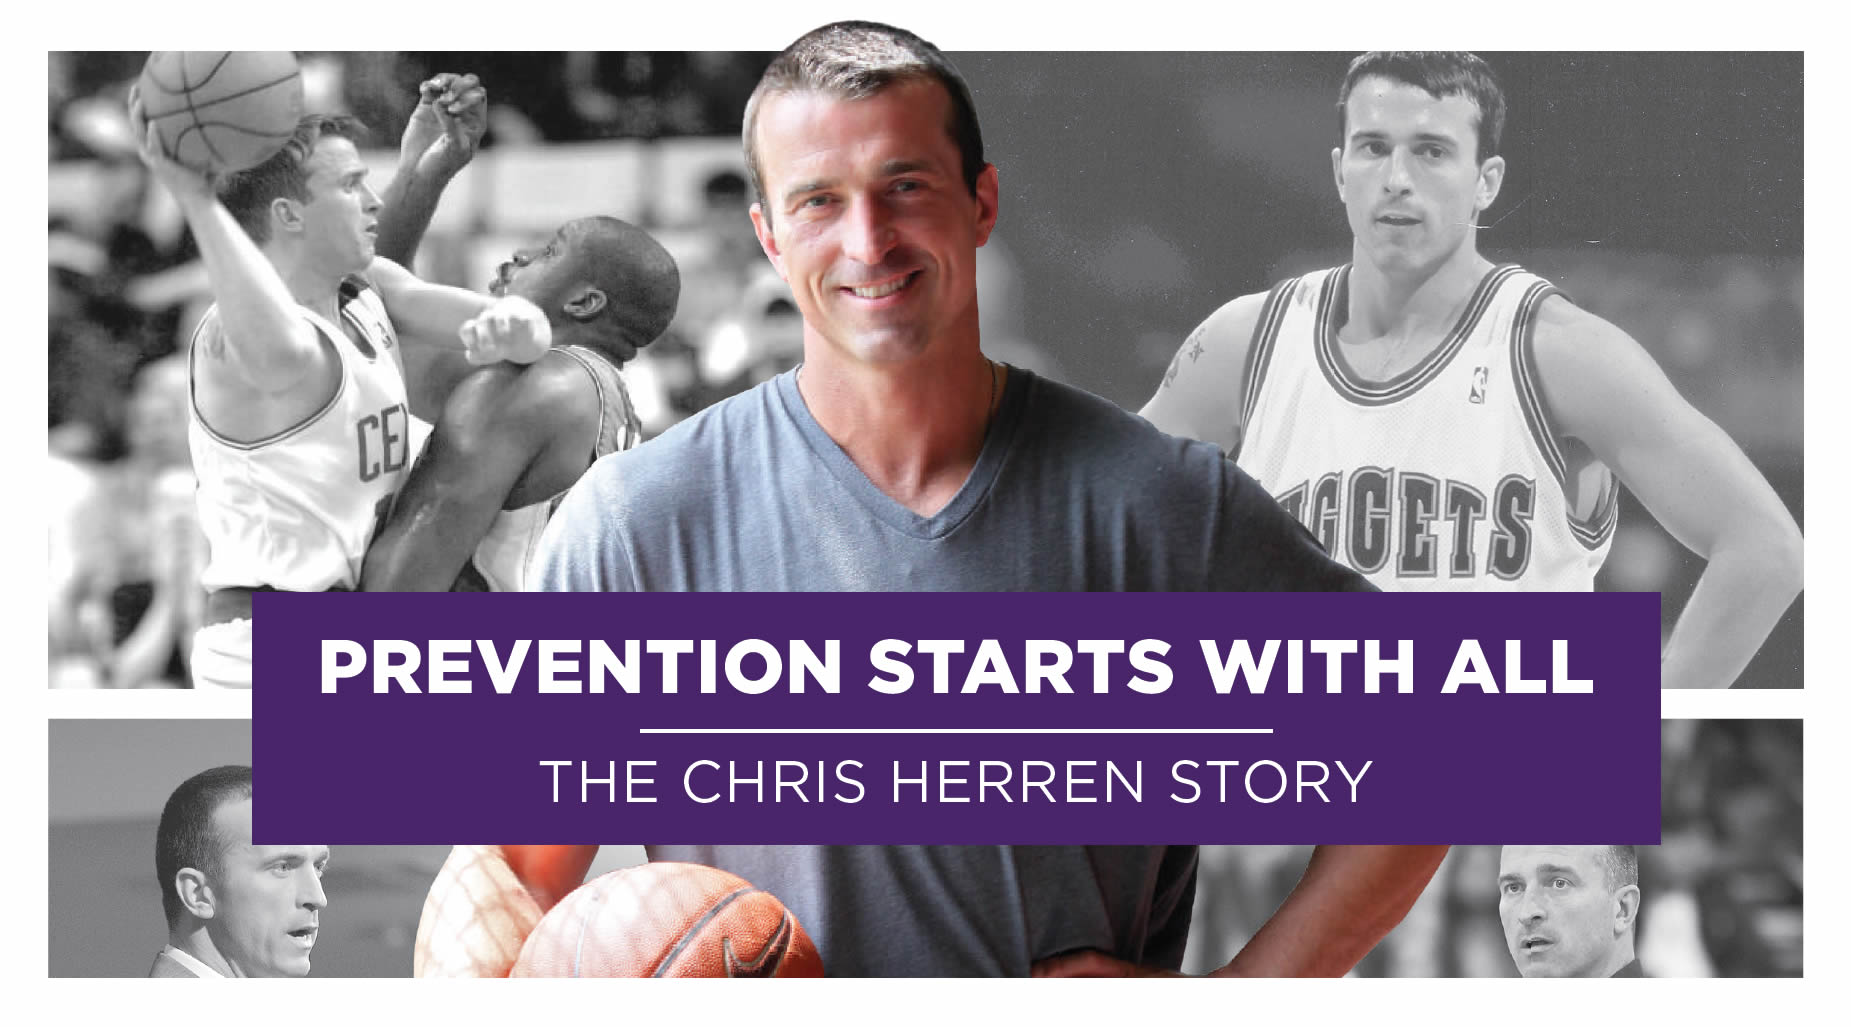 The Chris Herren Story